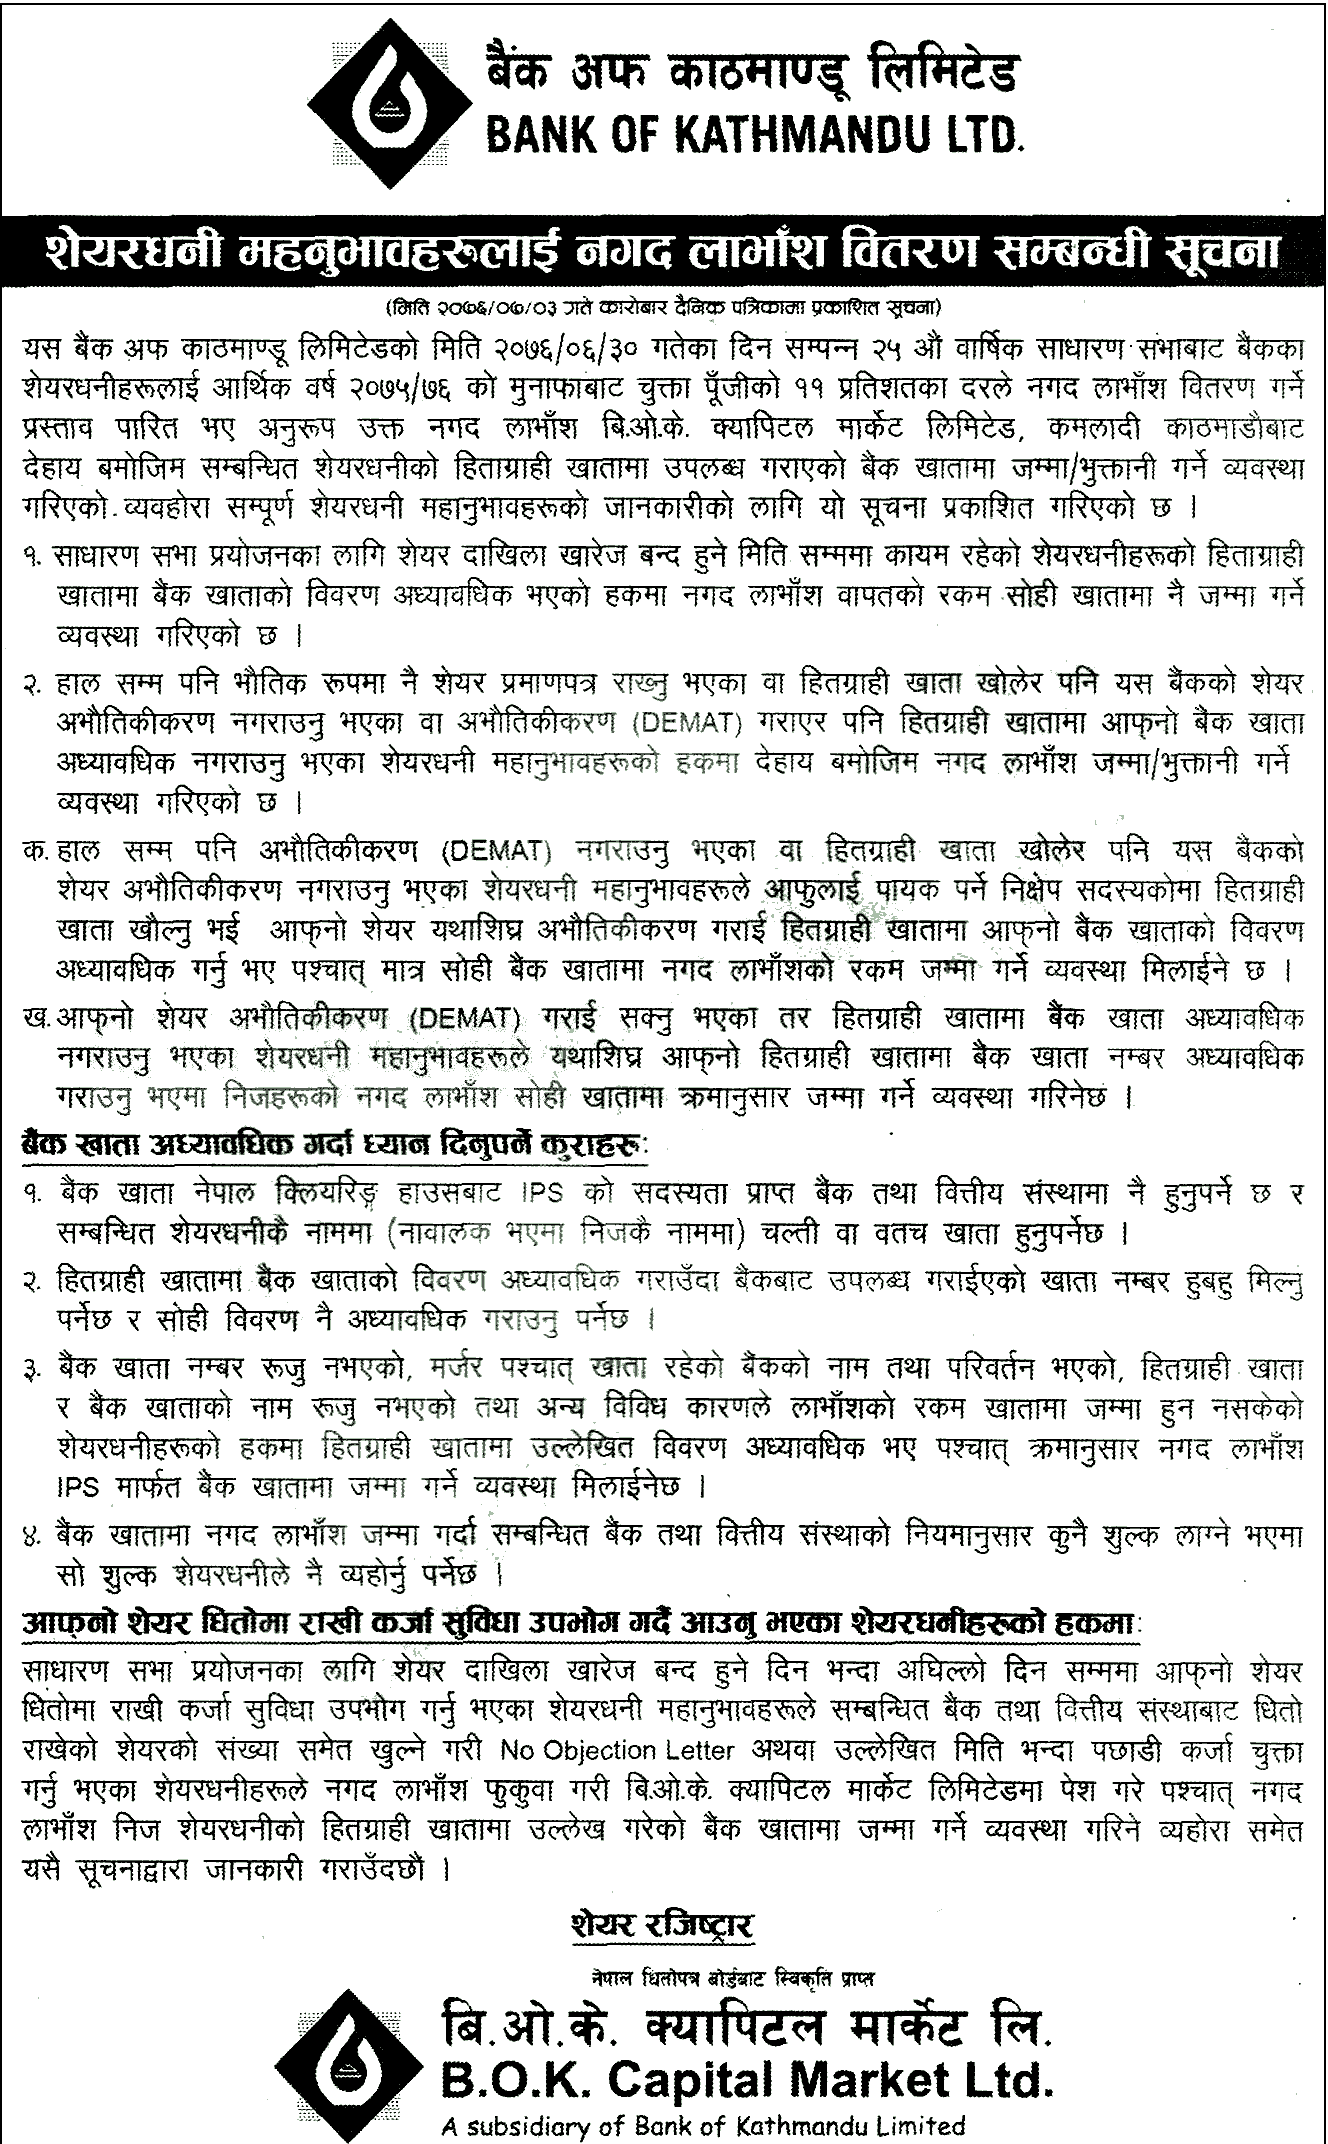 Bank of Kathmandu Notice for Distribution of Cash Dividend to Shareholders